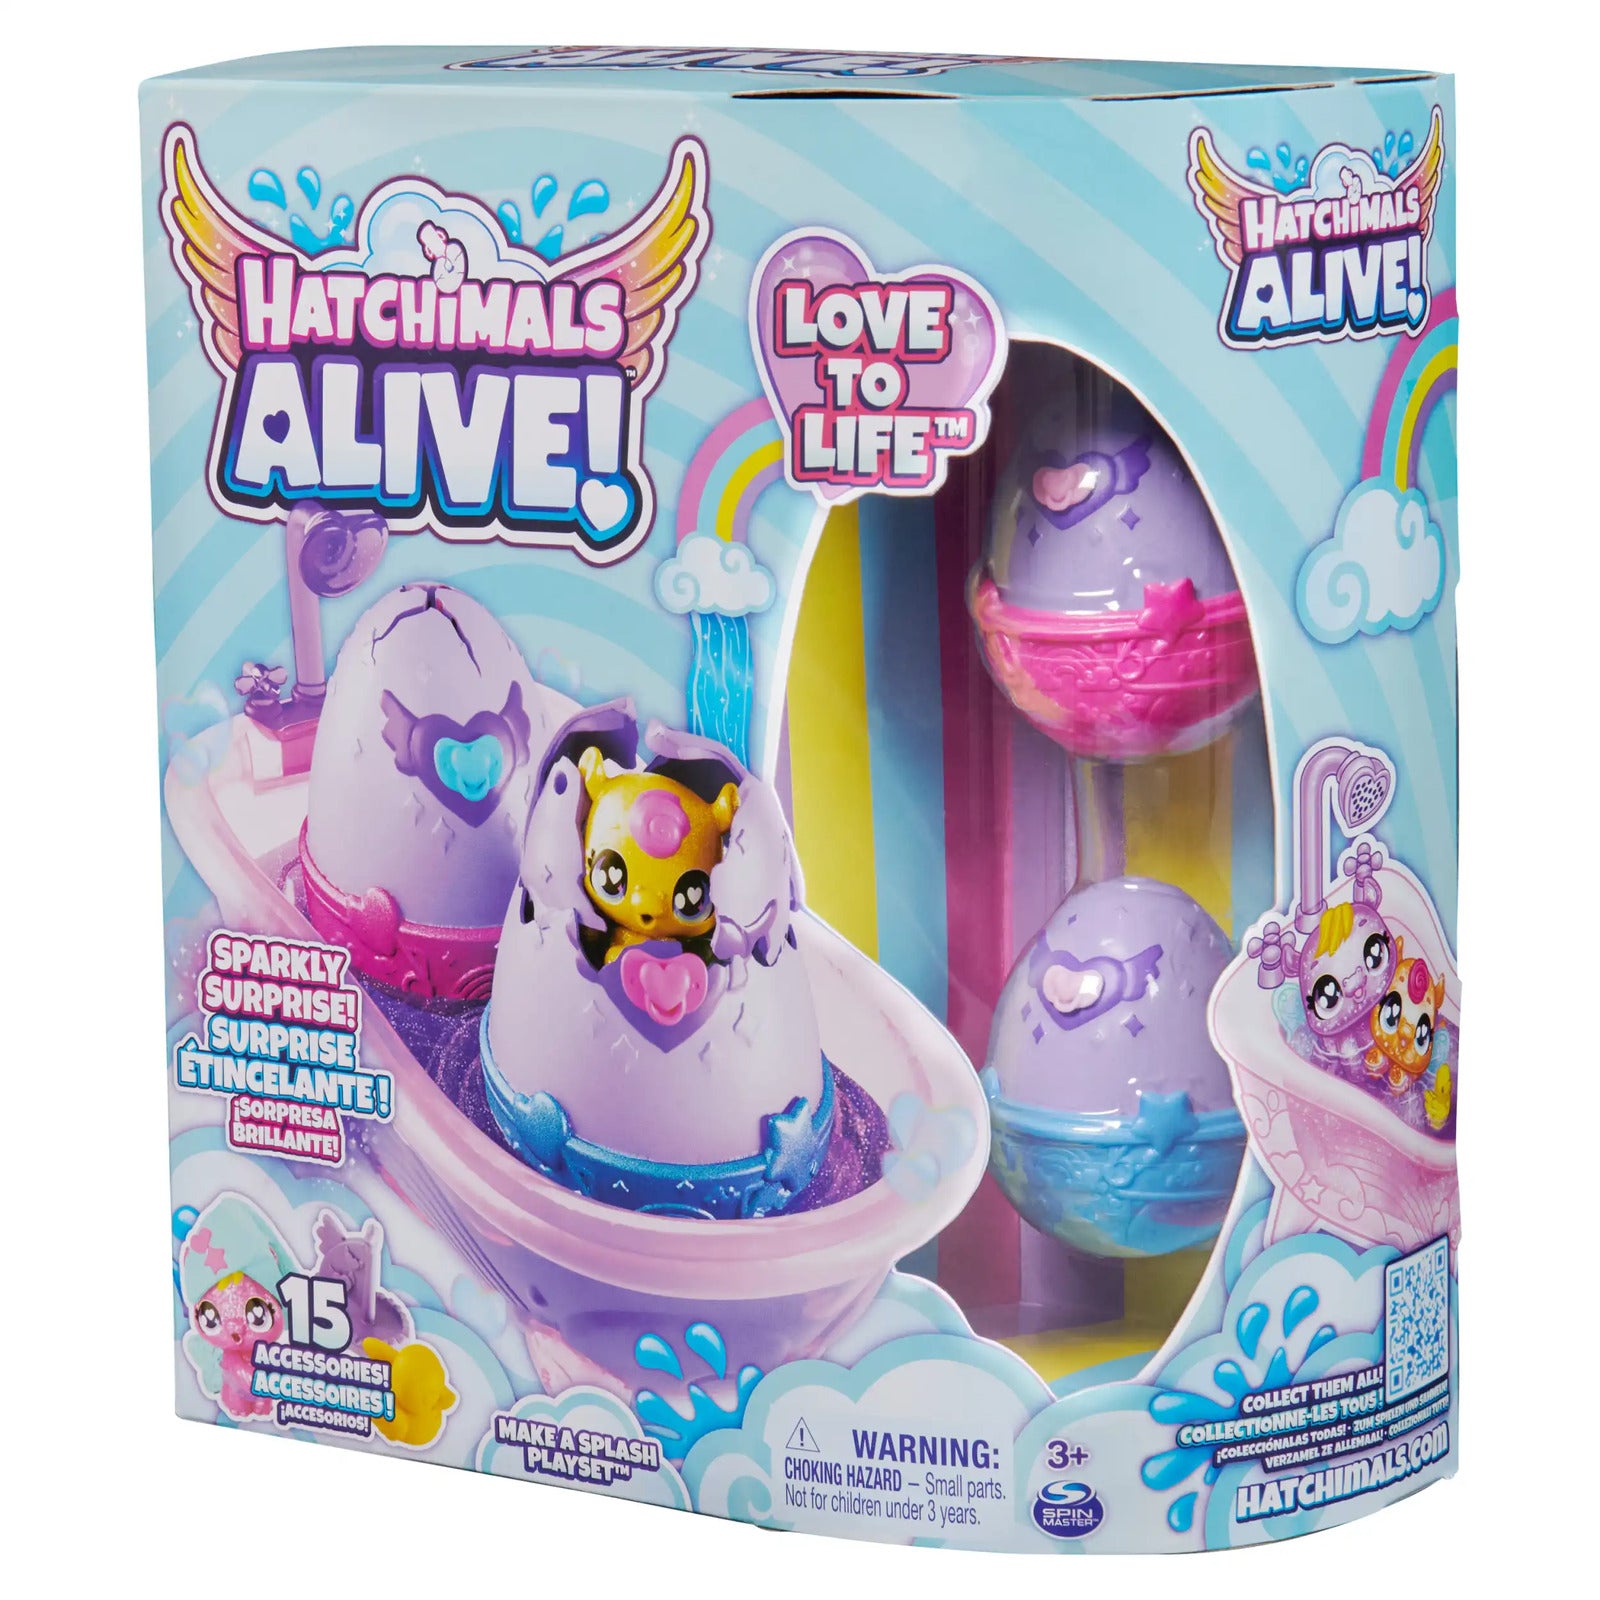 Hatchimals Alive Love To Life - Make A Splash Playset